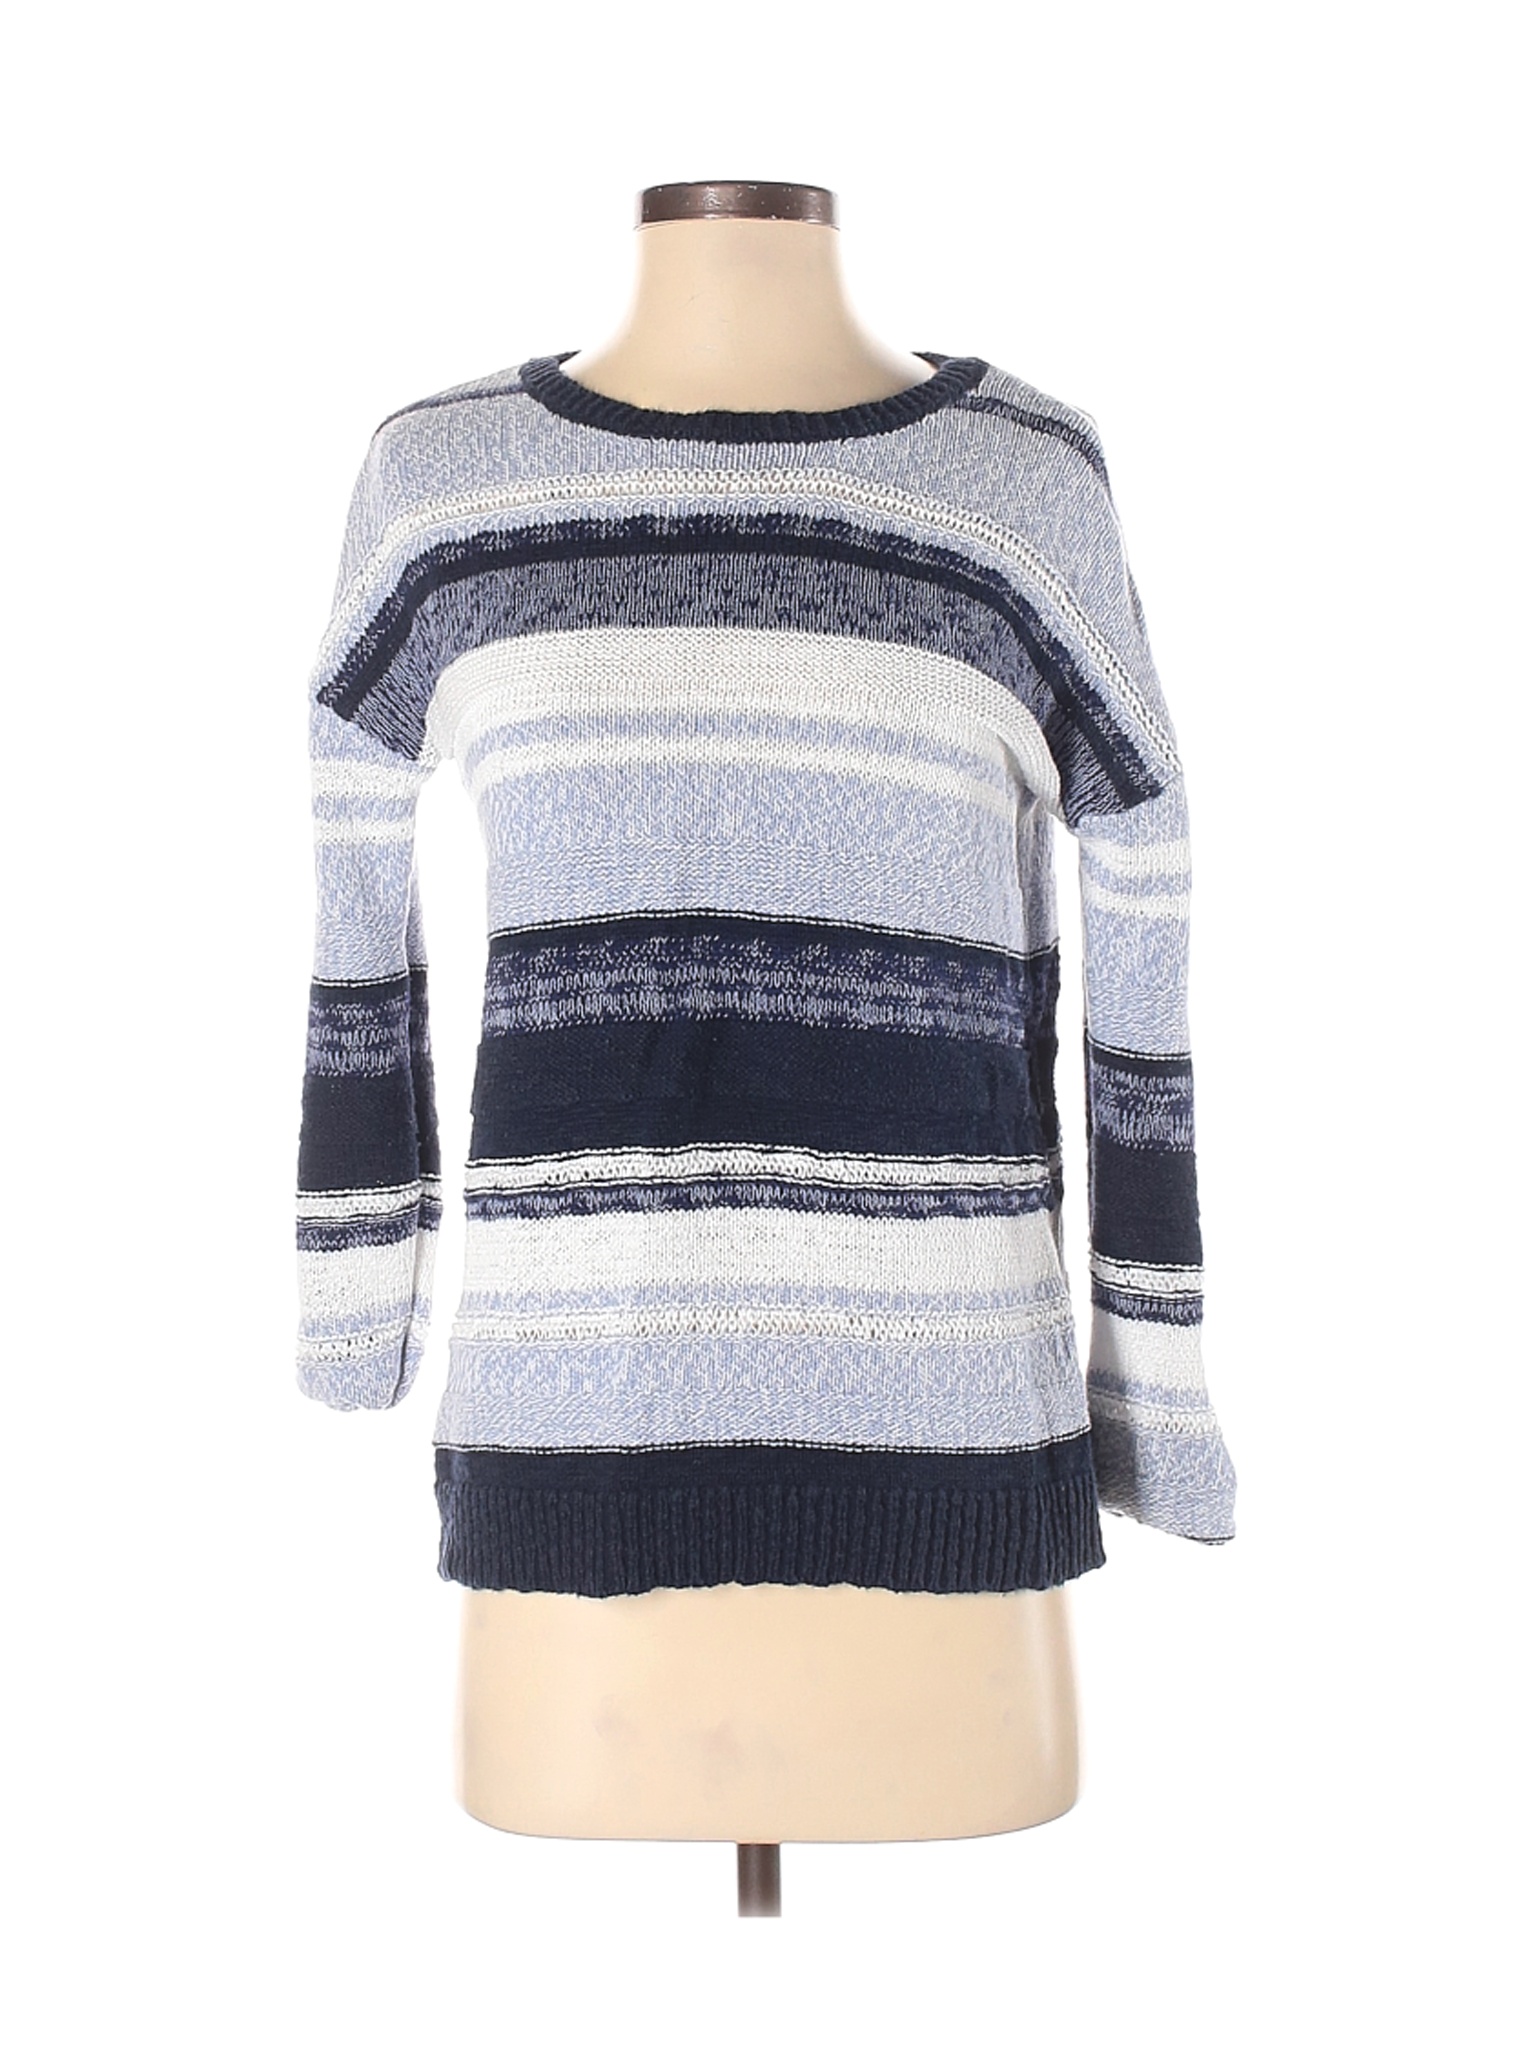 Max Studio Women Blue Pullover Sweater XS | eBay